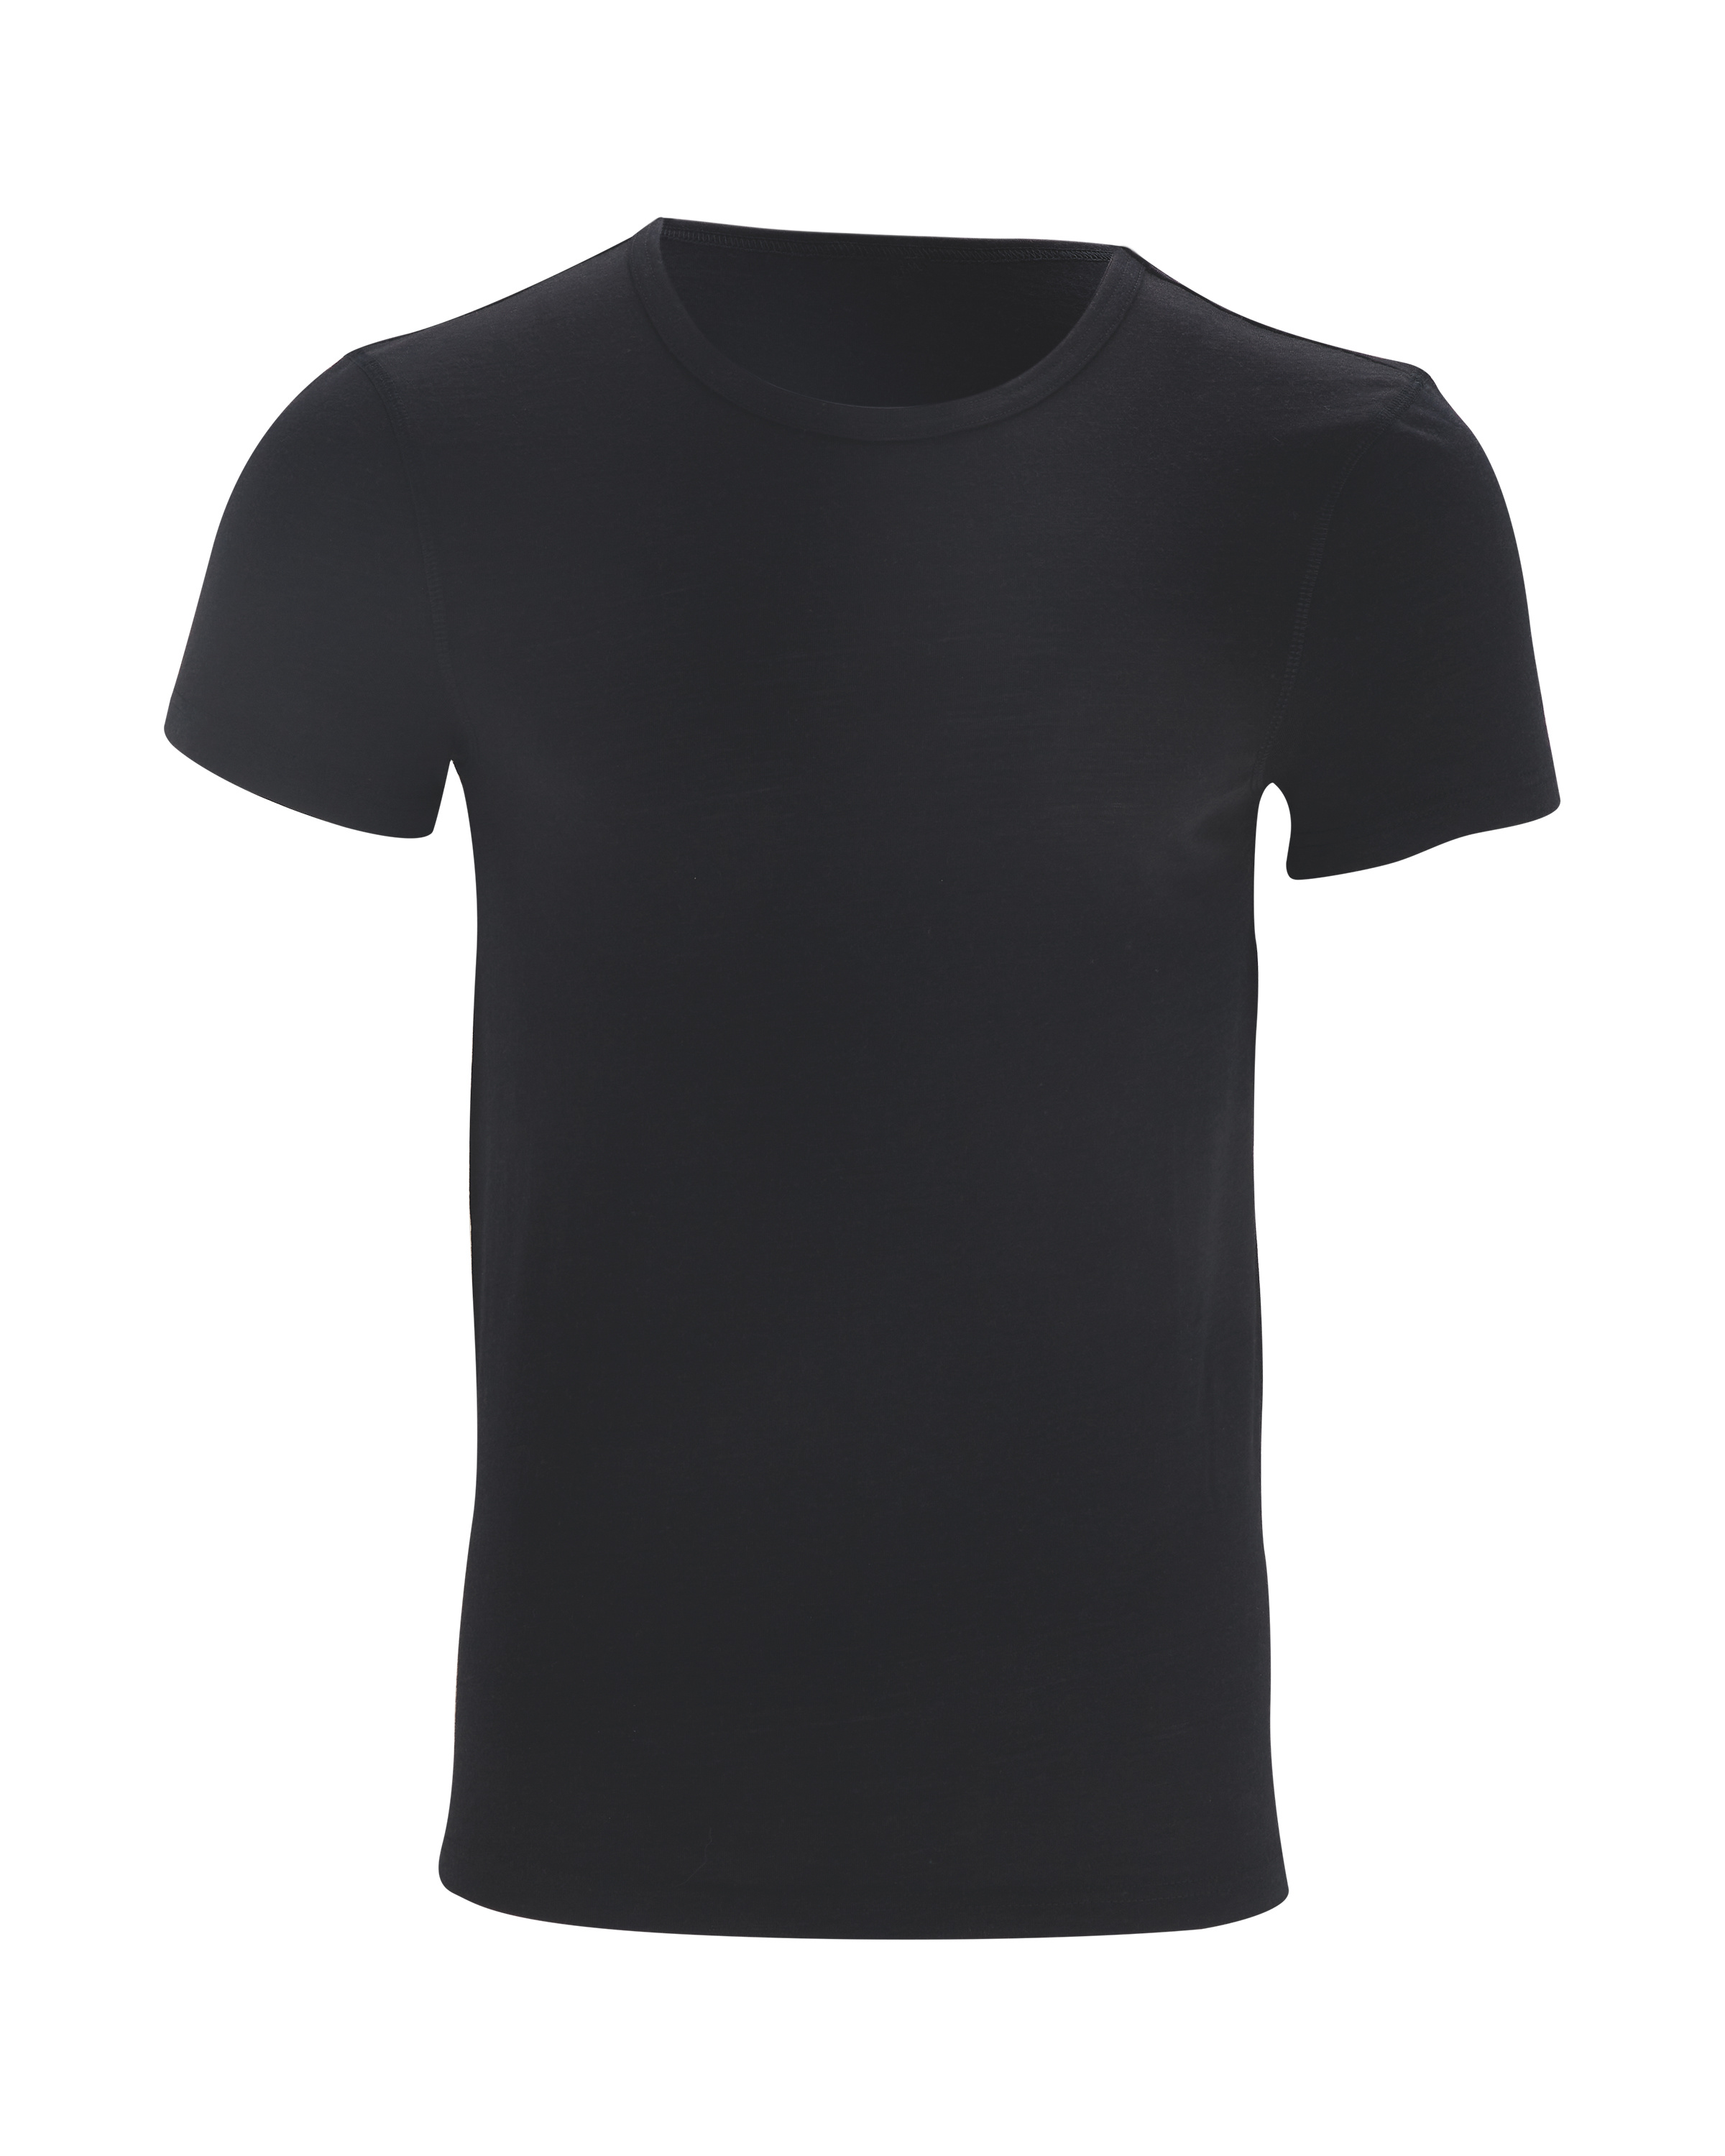 Men's Black Base Shirt - ALDI UK